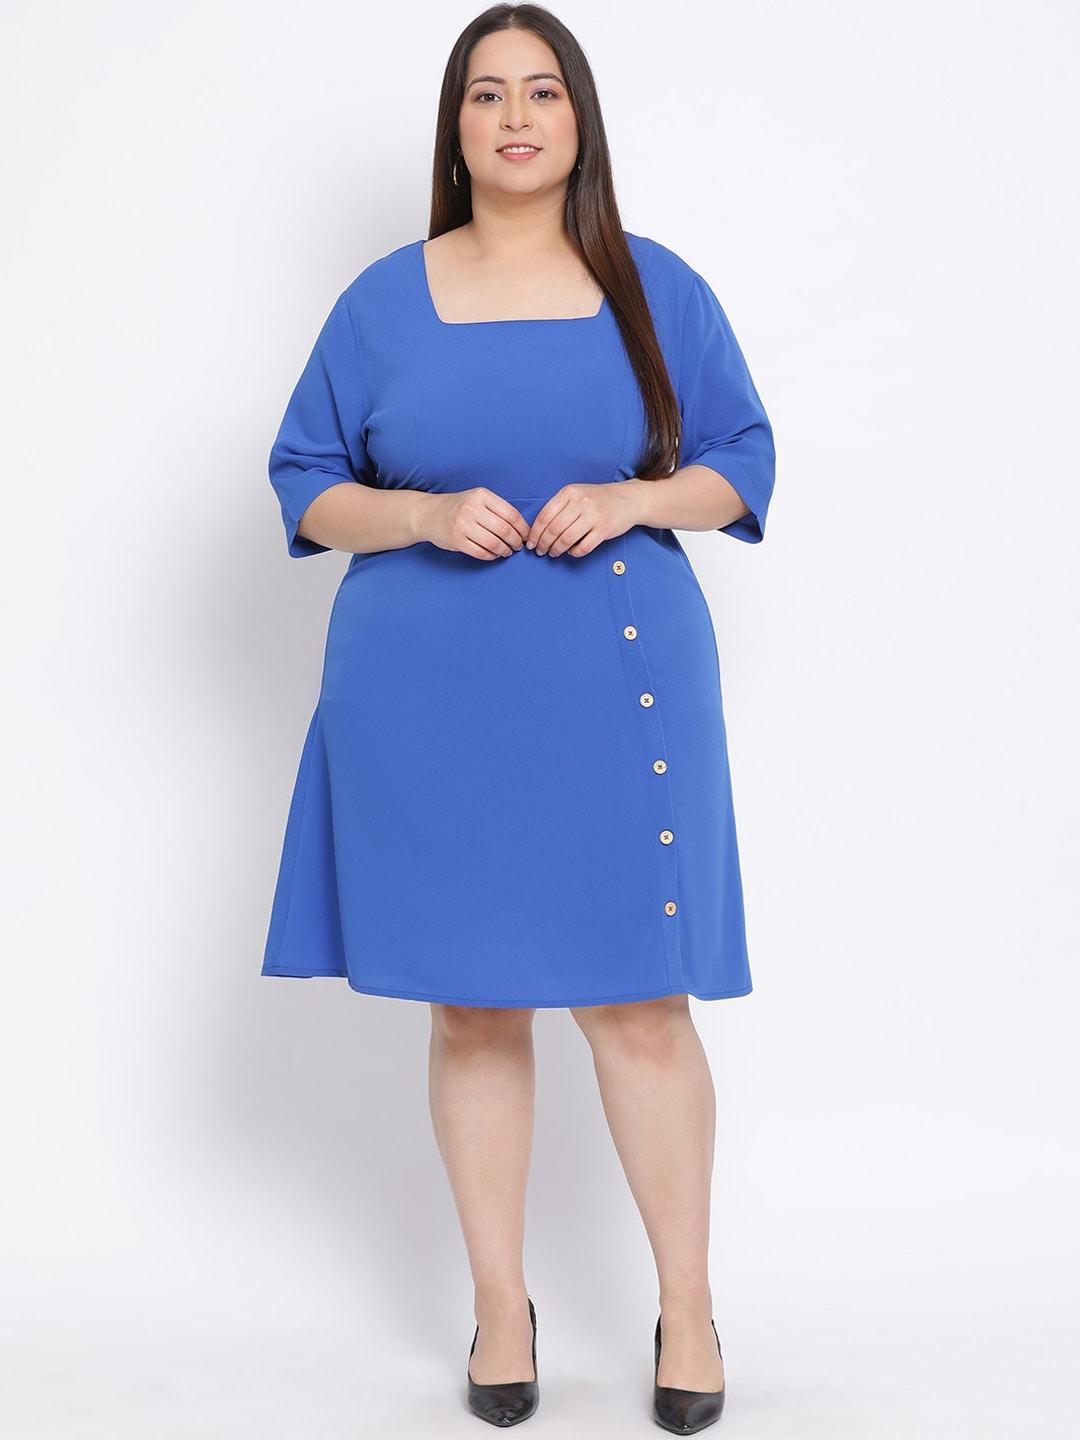 oxolloxo-women-plus-size-blue-solid-a-line-dress